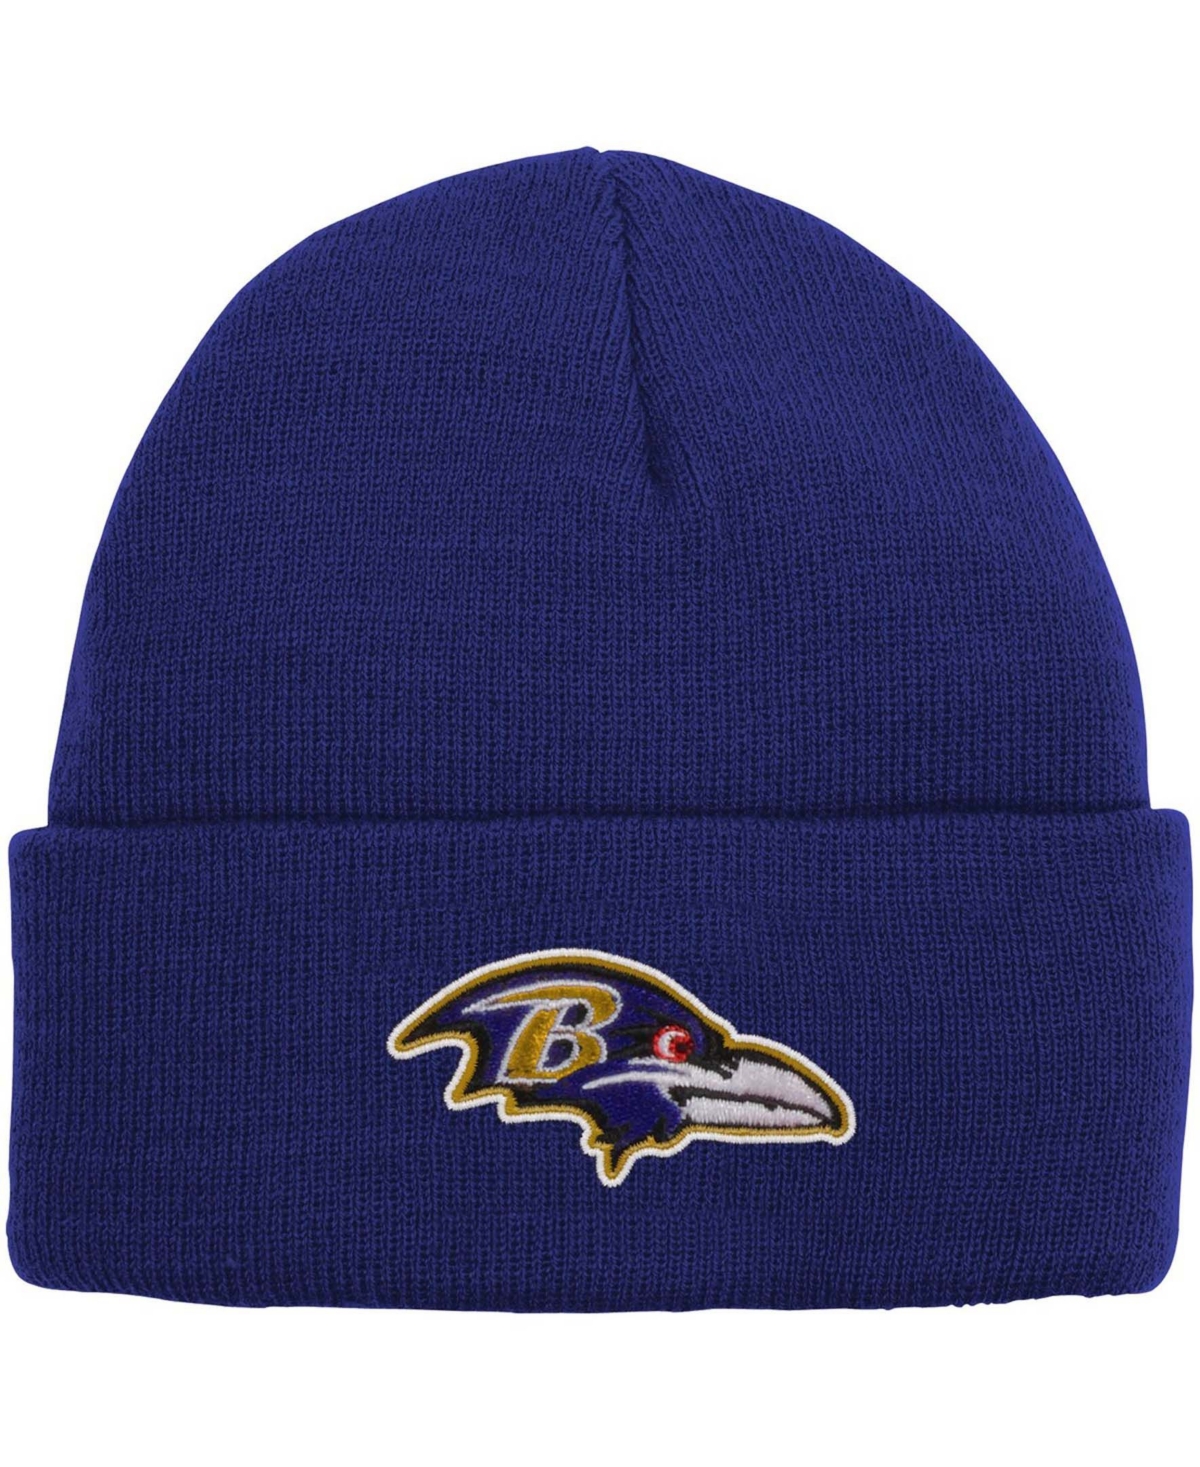 Outerstuff Kids' Big Boys And Girls Purple Baltimore Ravens Basic Cuffed Knit Hat